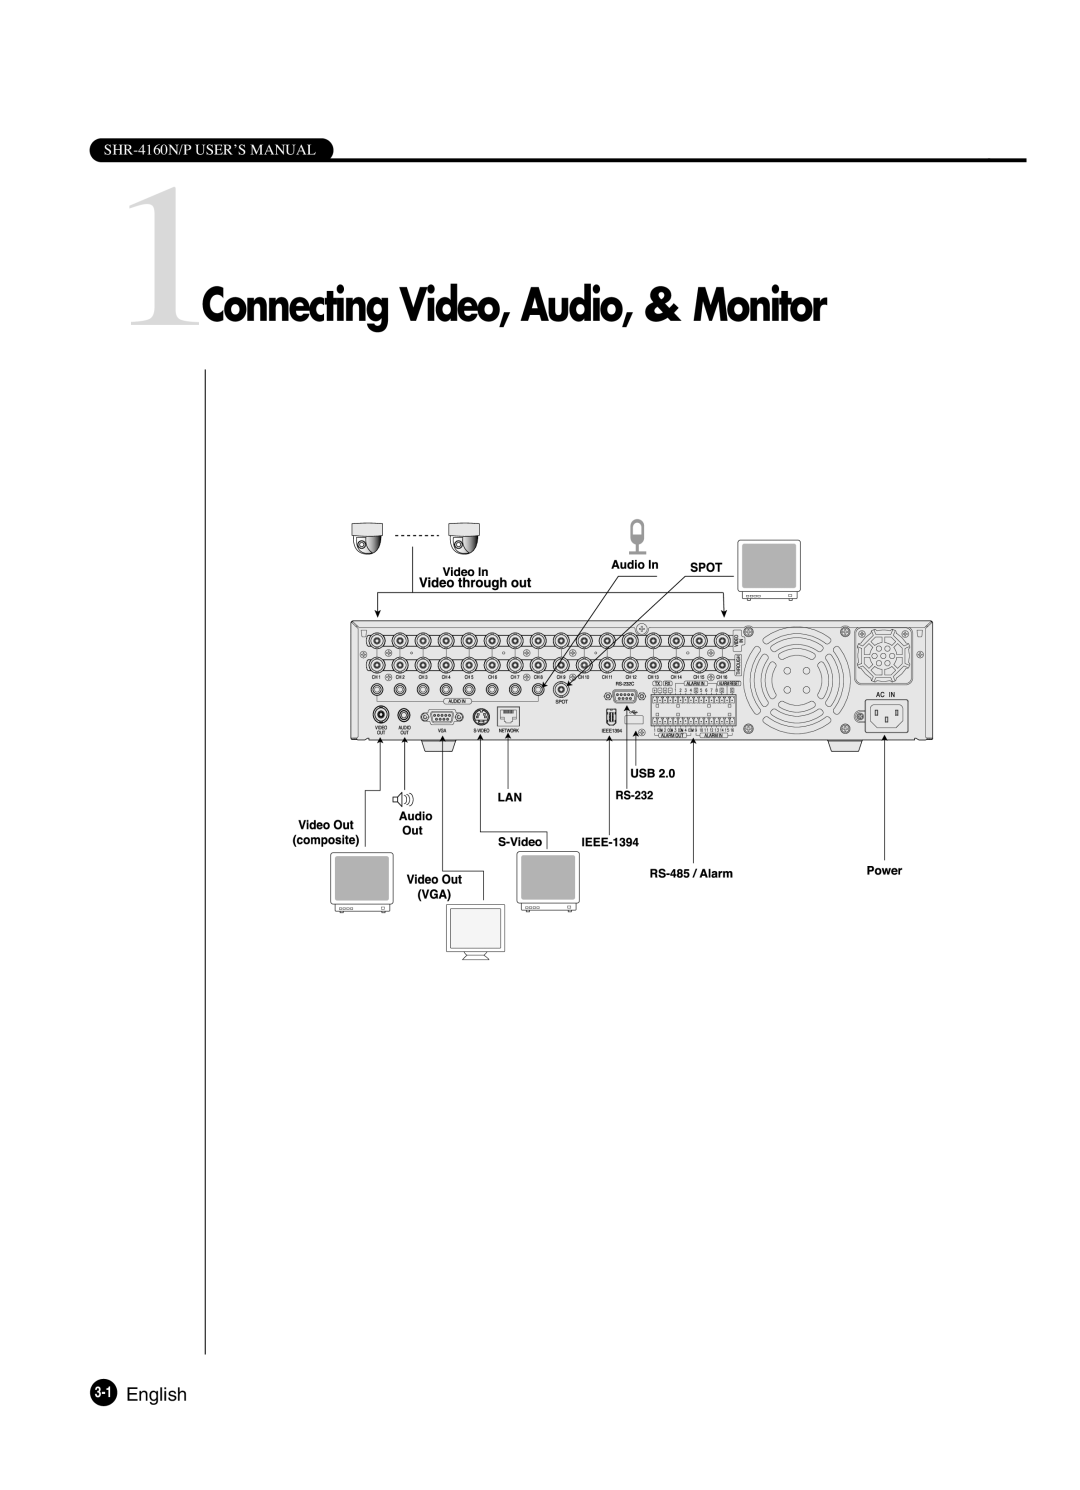 Samsung SHR-4160P manual 1Connecting Video, Audio, & Monitor, 1English 